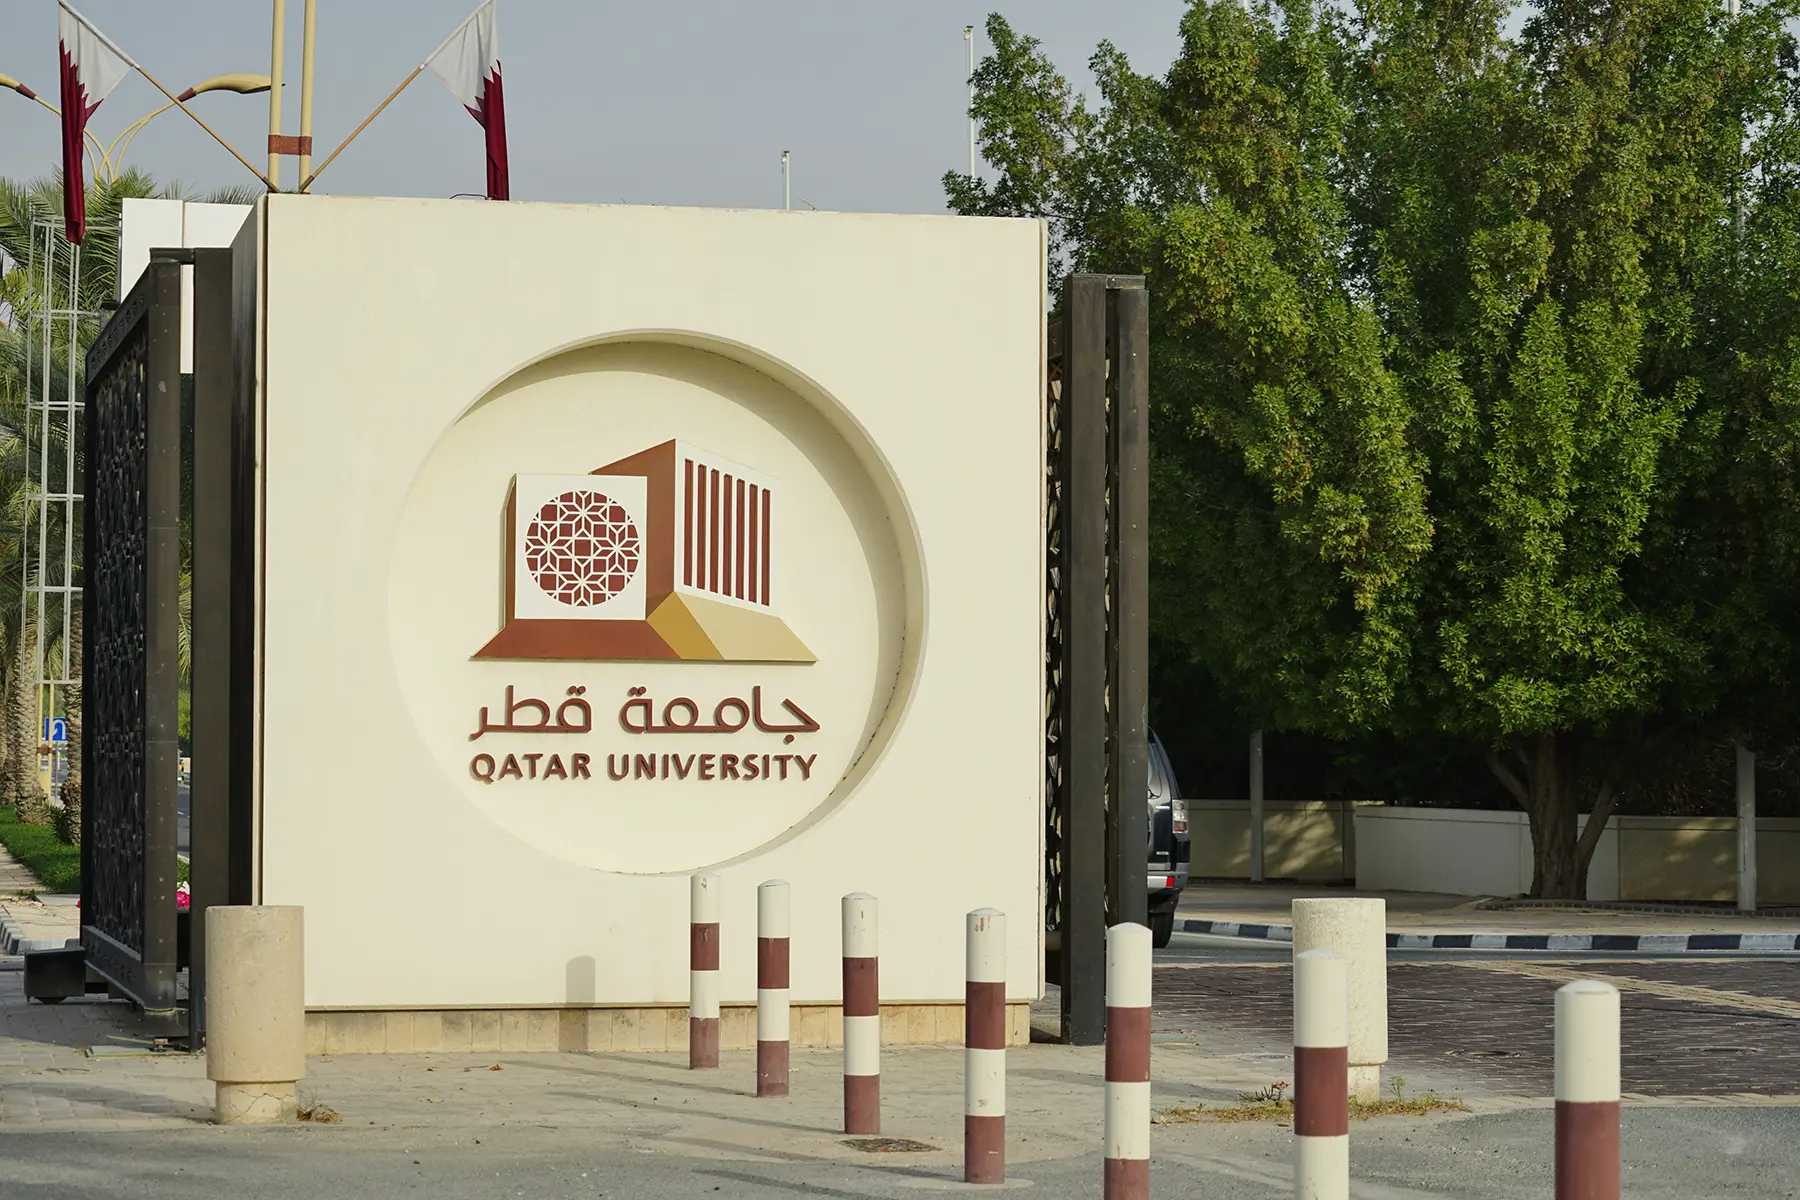 Qatar University in Doha